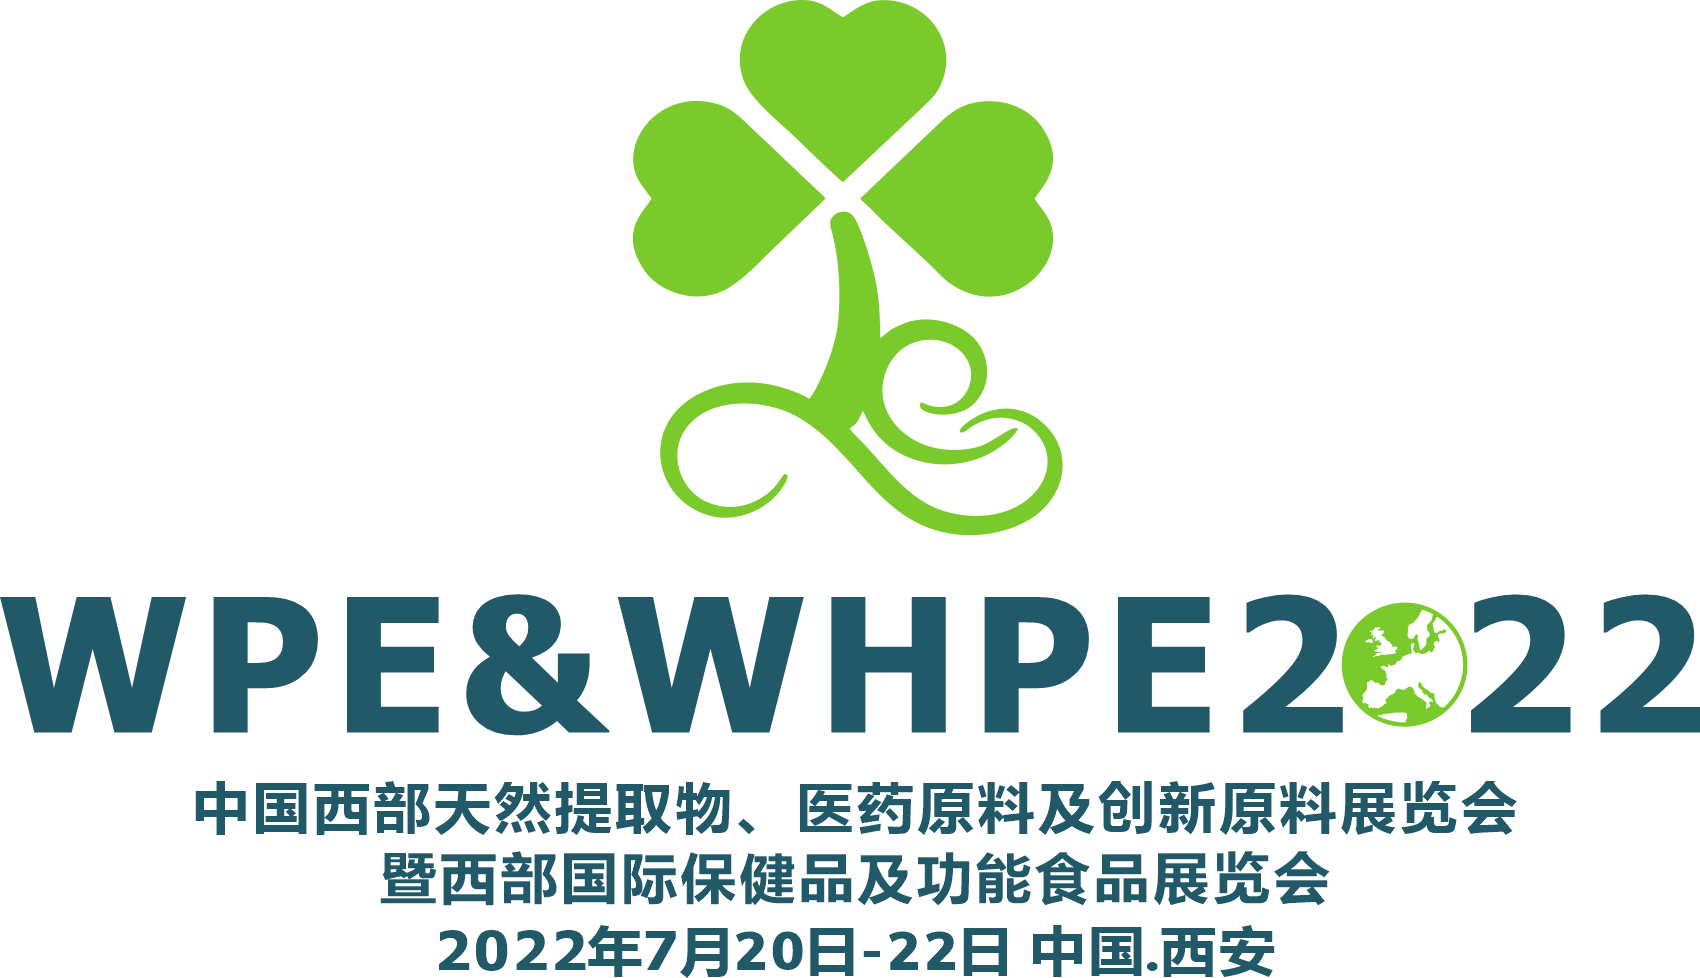 保健品展|西部保健品展 |西部保健品及功能性食品展WPE&WHPE2022（同期提取物展）